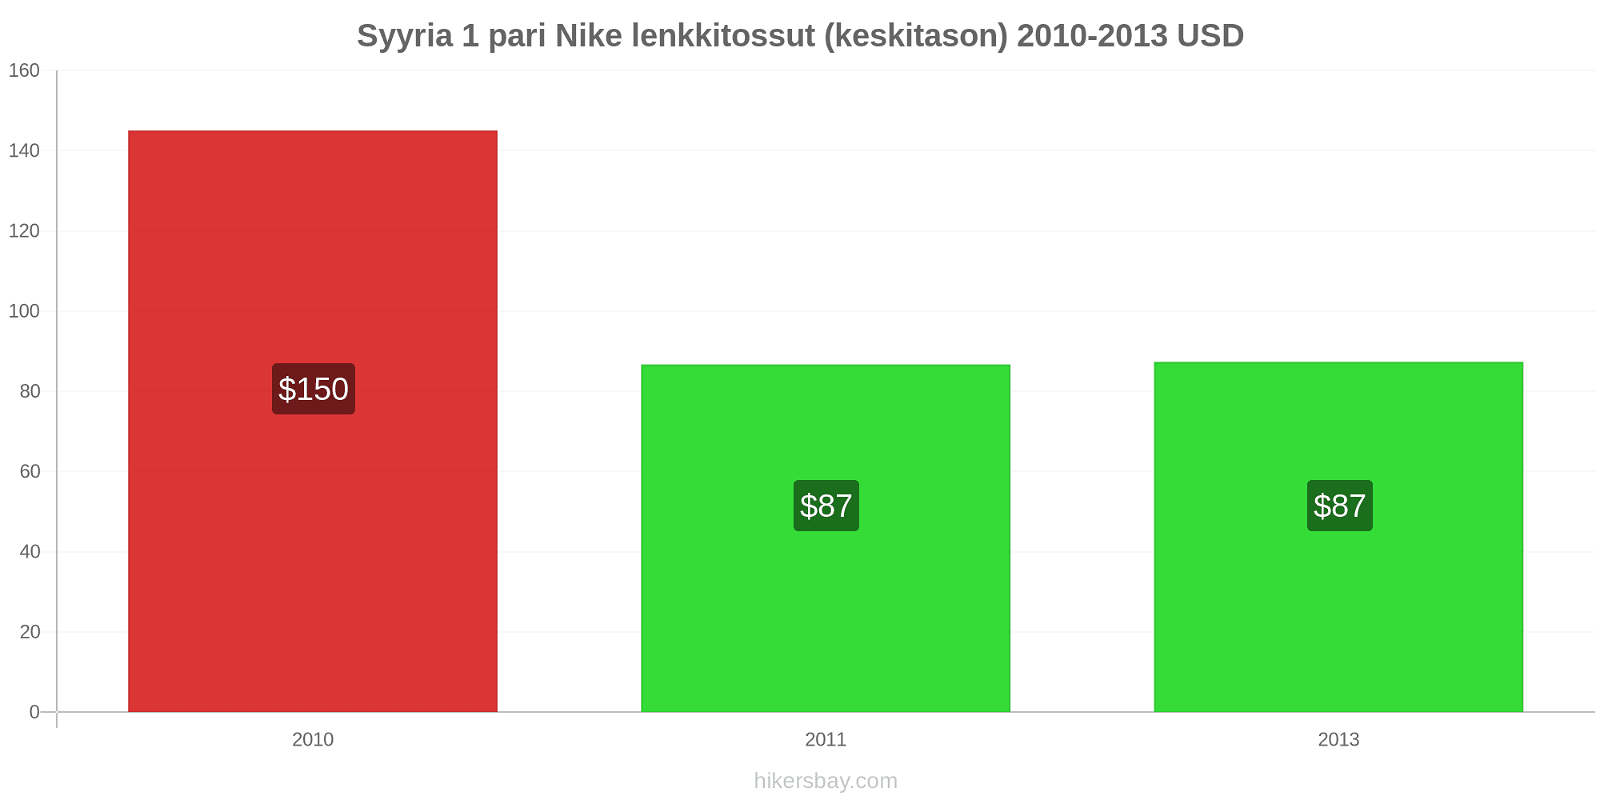 Syyria hintojen muutokset 1 pari Nike lenkkitossut (keskitason) hikersbay.com